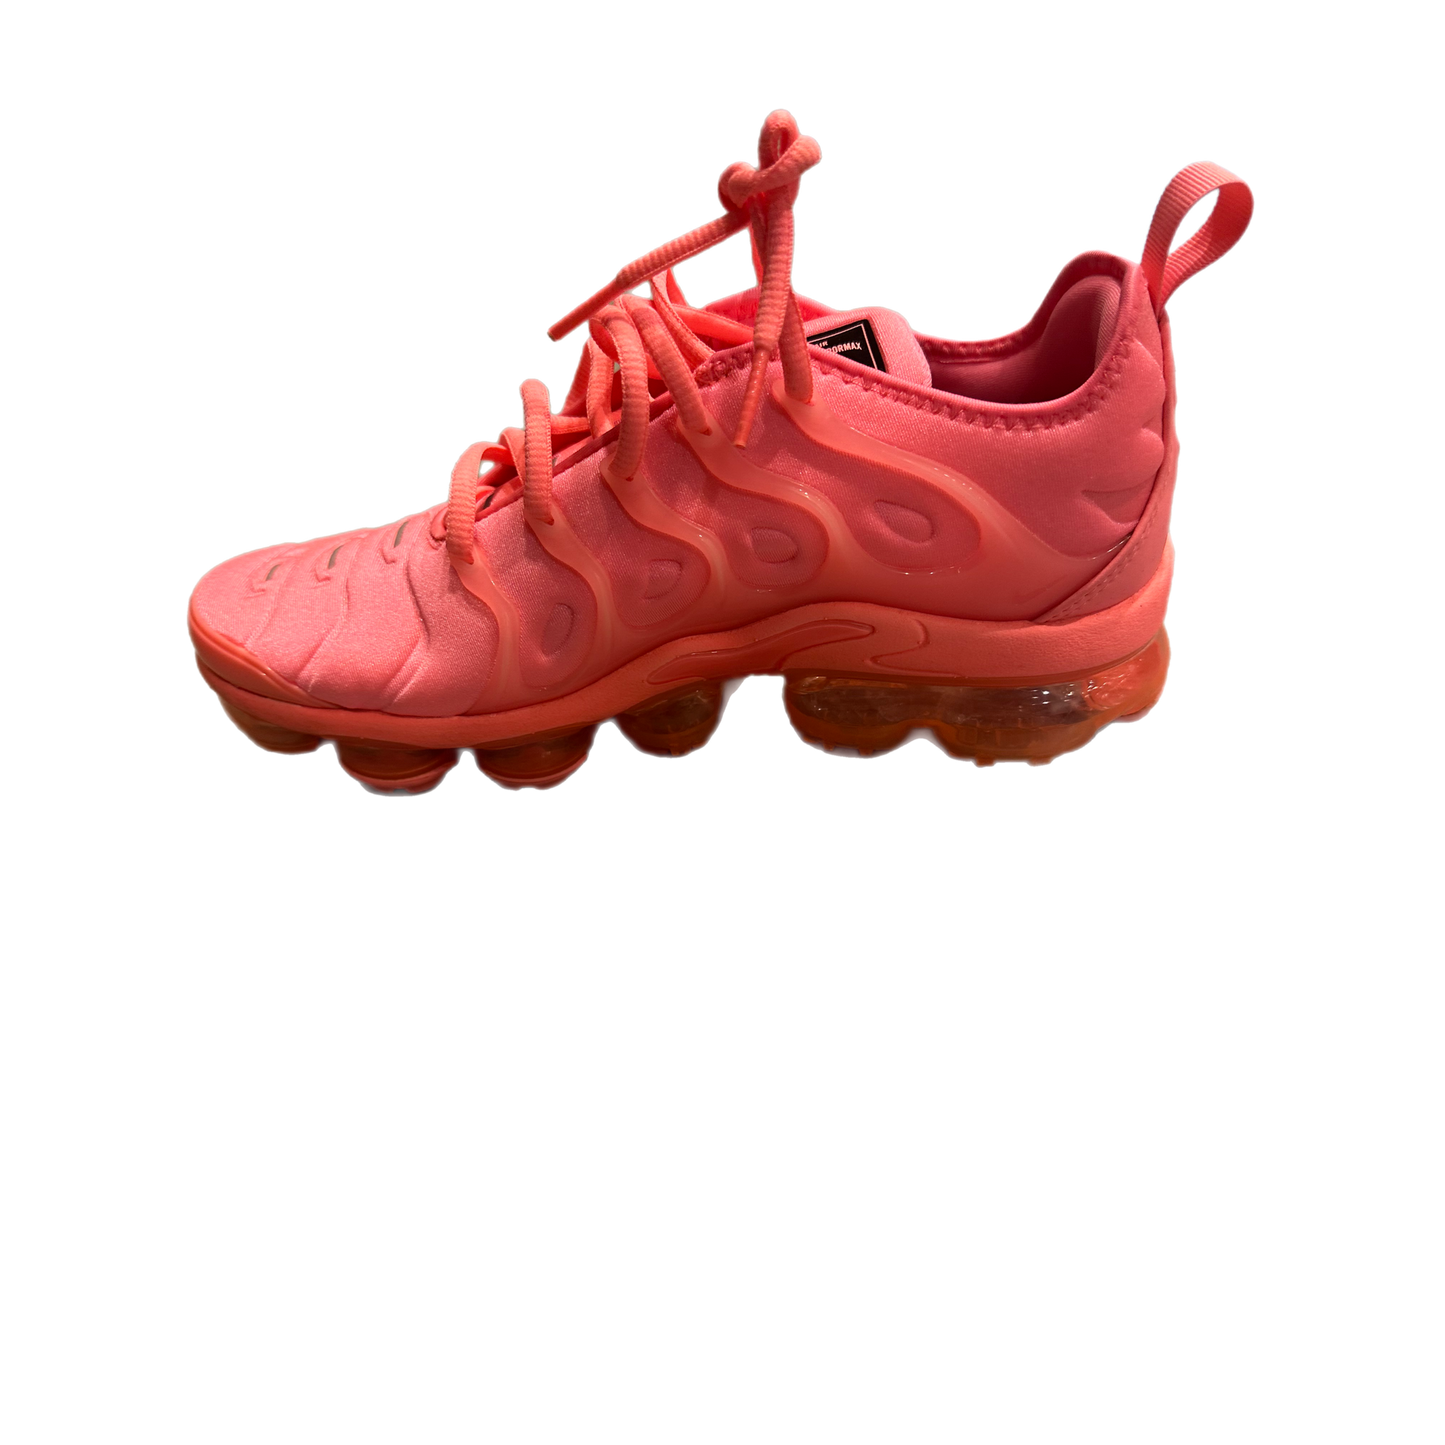 Nike - "Vapormax Pink" - Size 6.5